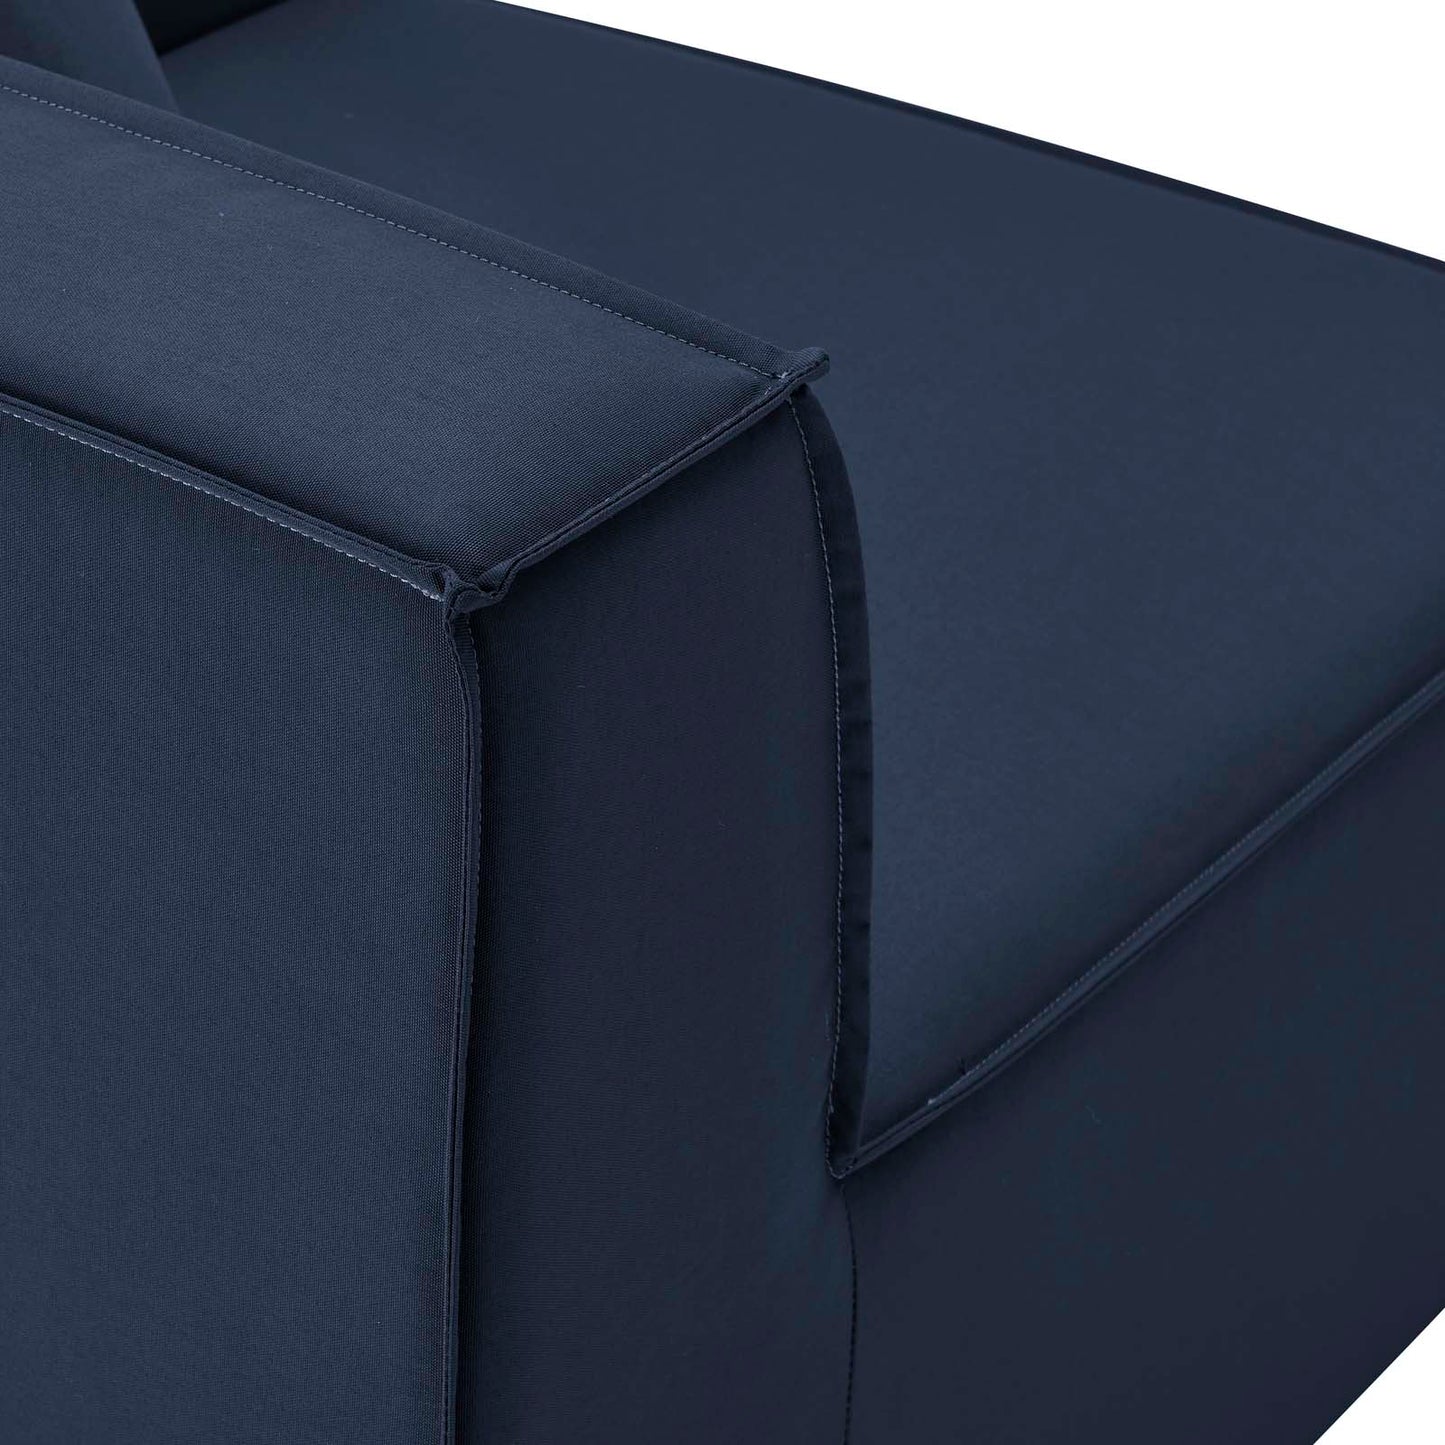 Saybrook Outdoor Patio Upholstered 3-Piece Sectional Sofa Navy EEI-4379-NAV